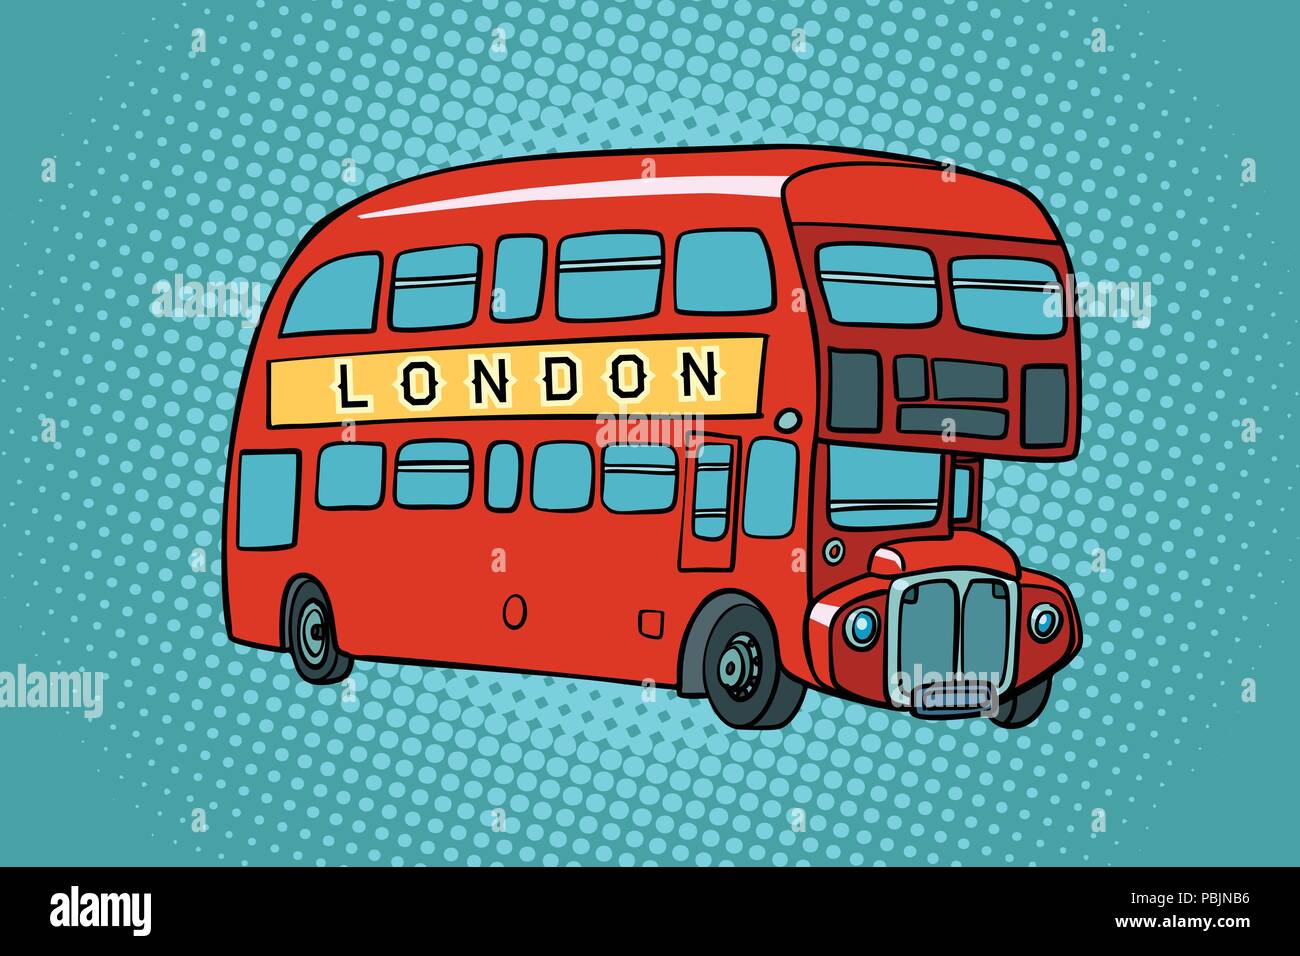 London double Decker bus Stock Vector